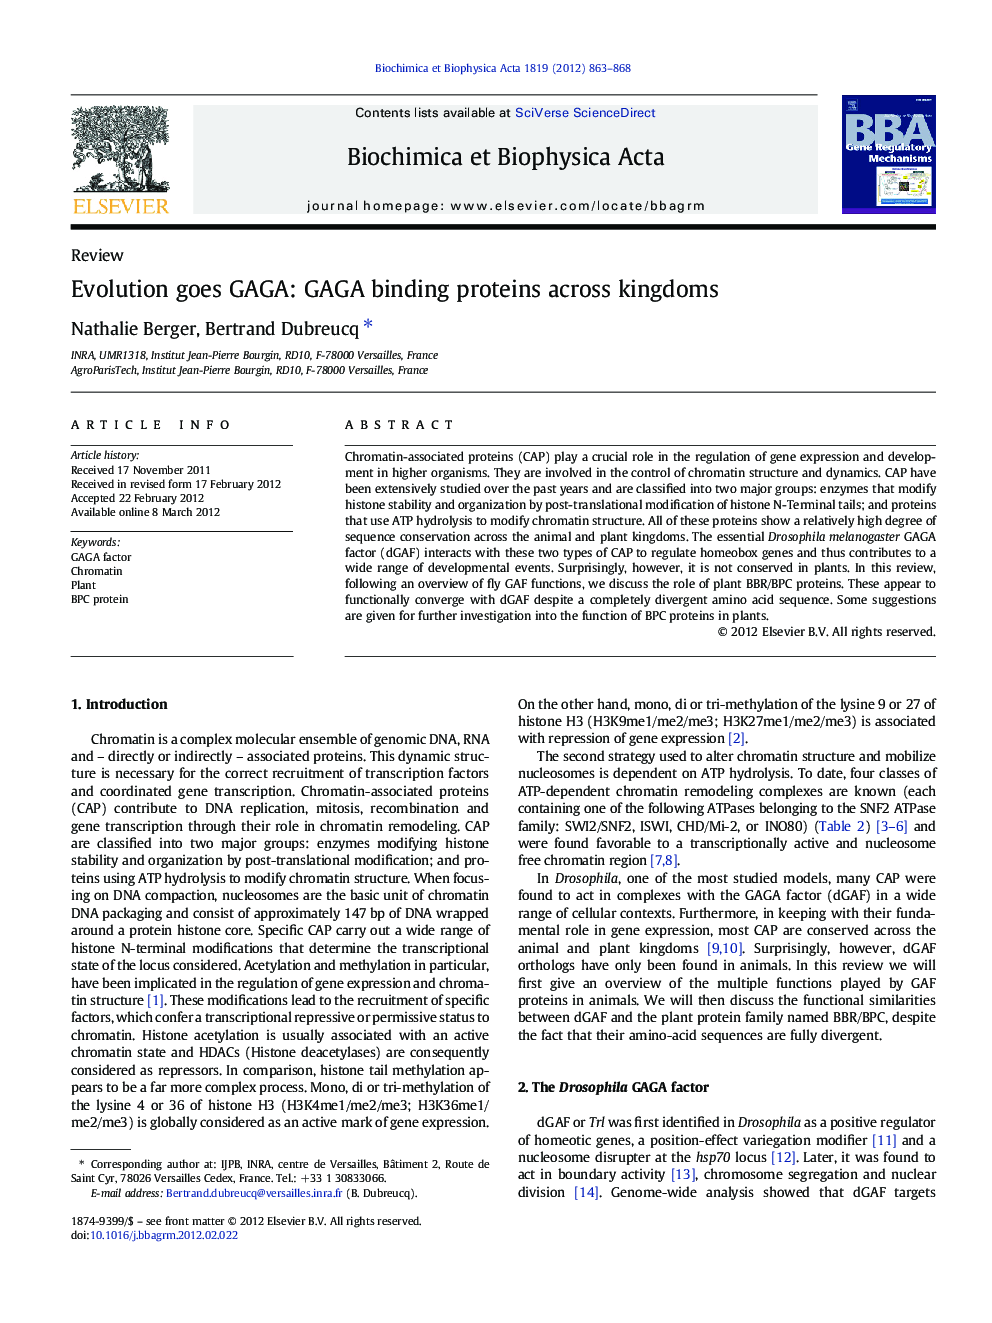 Evolution goes GAGA: GAGA binding proteins across kingdoms